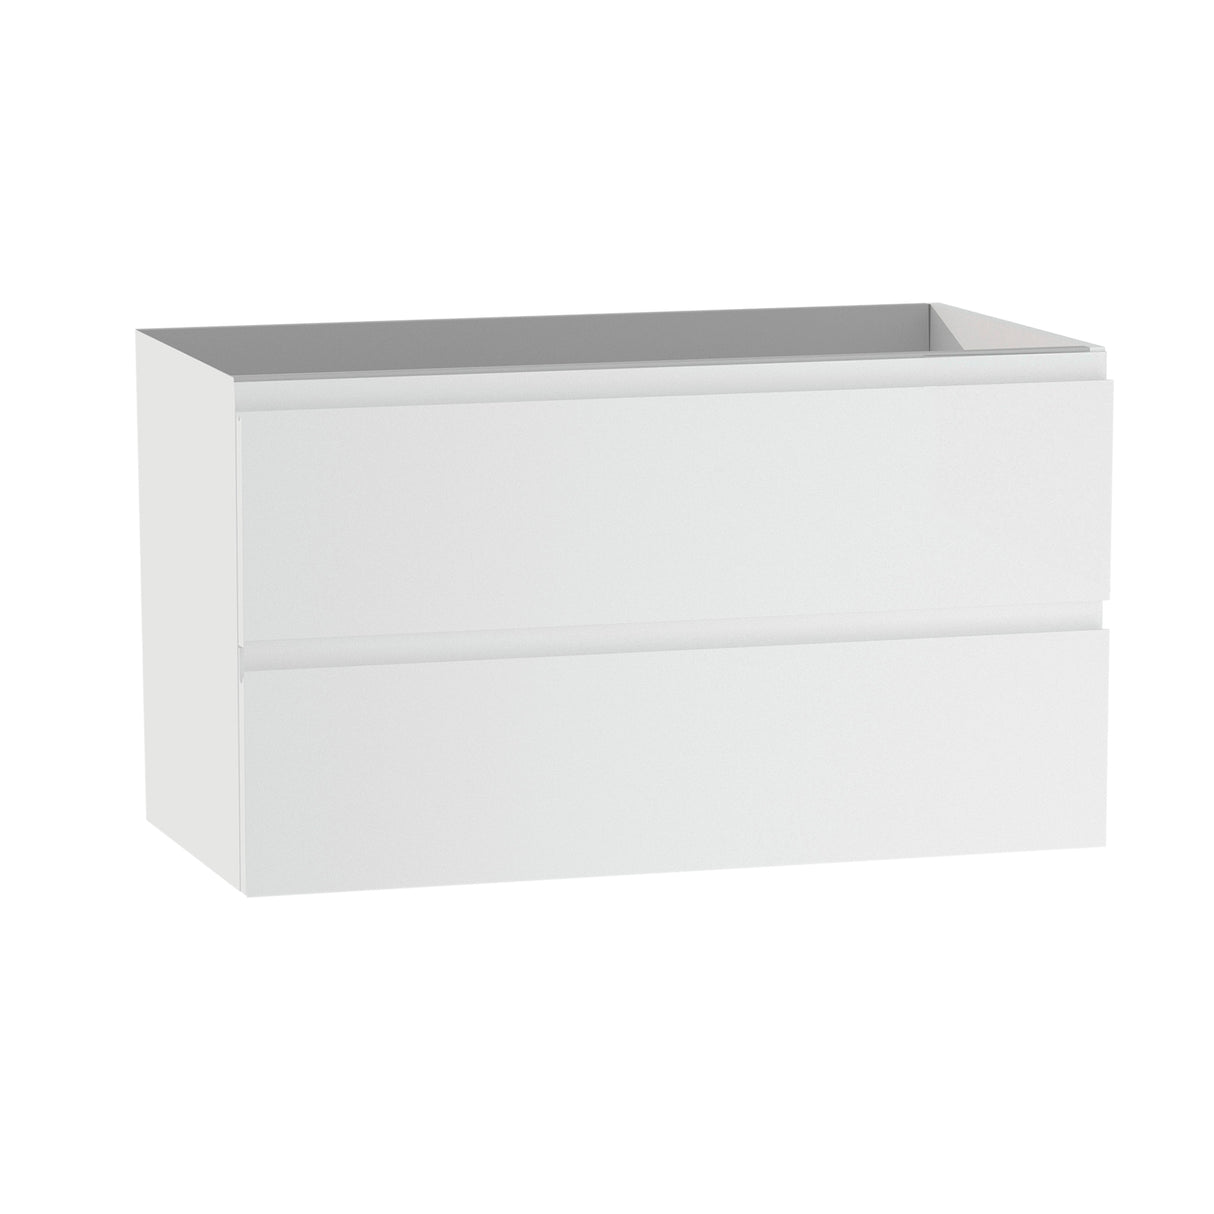 DAX Pasadena Single Vanity Cabinet with Onix Basin, 36", Matte White DAX-PAS013627-ONX